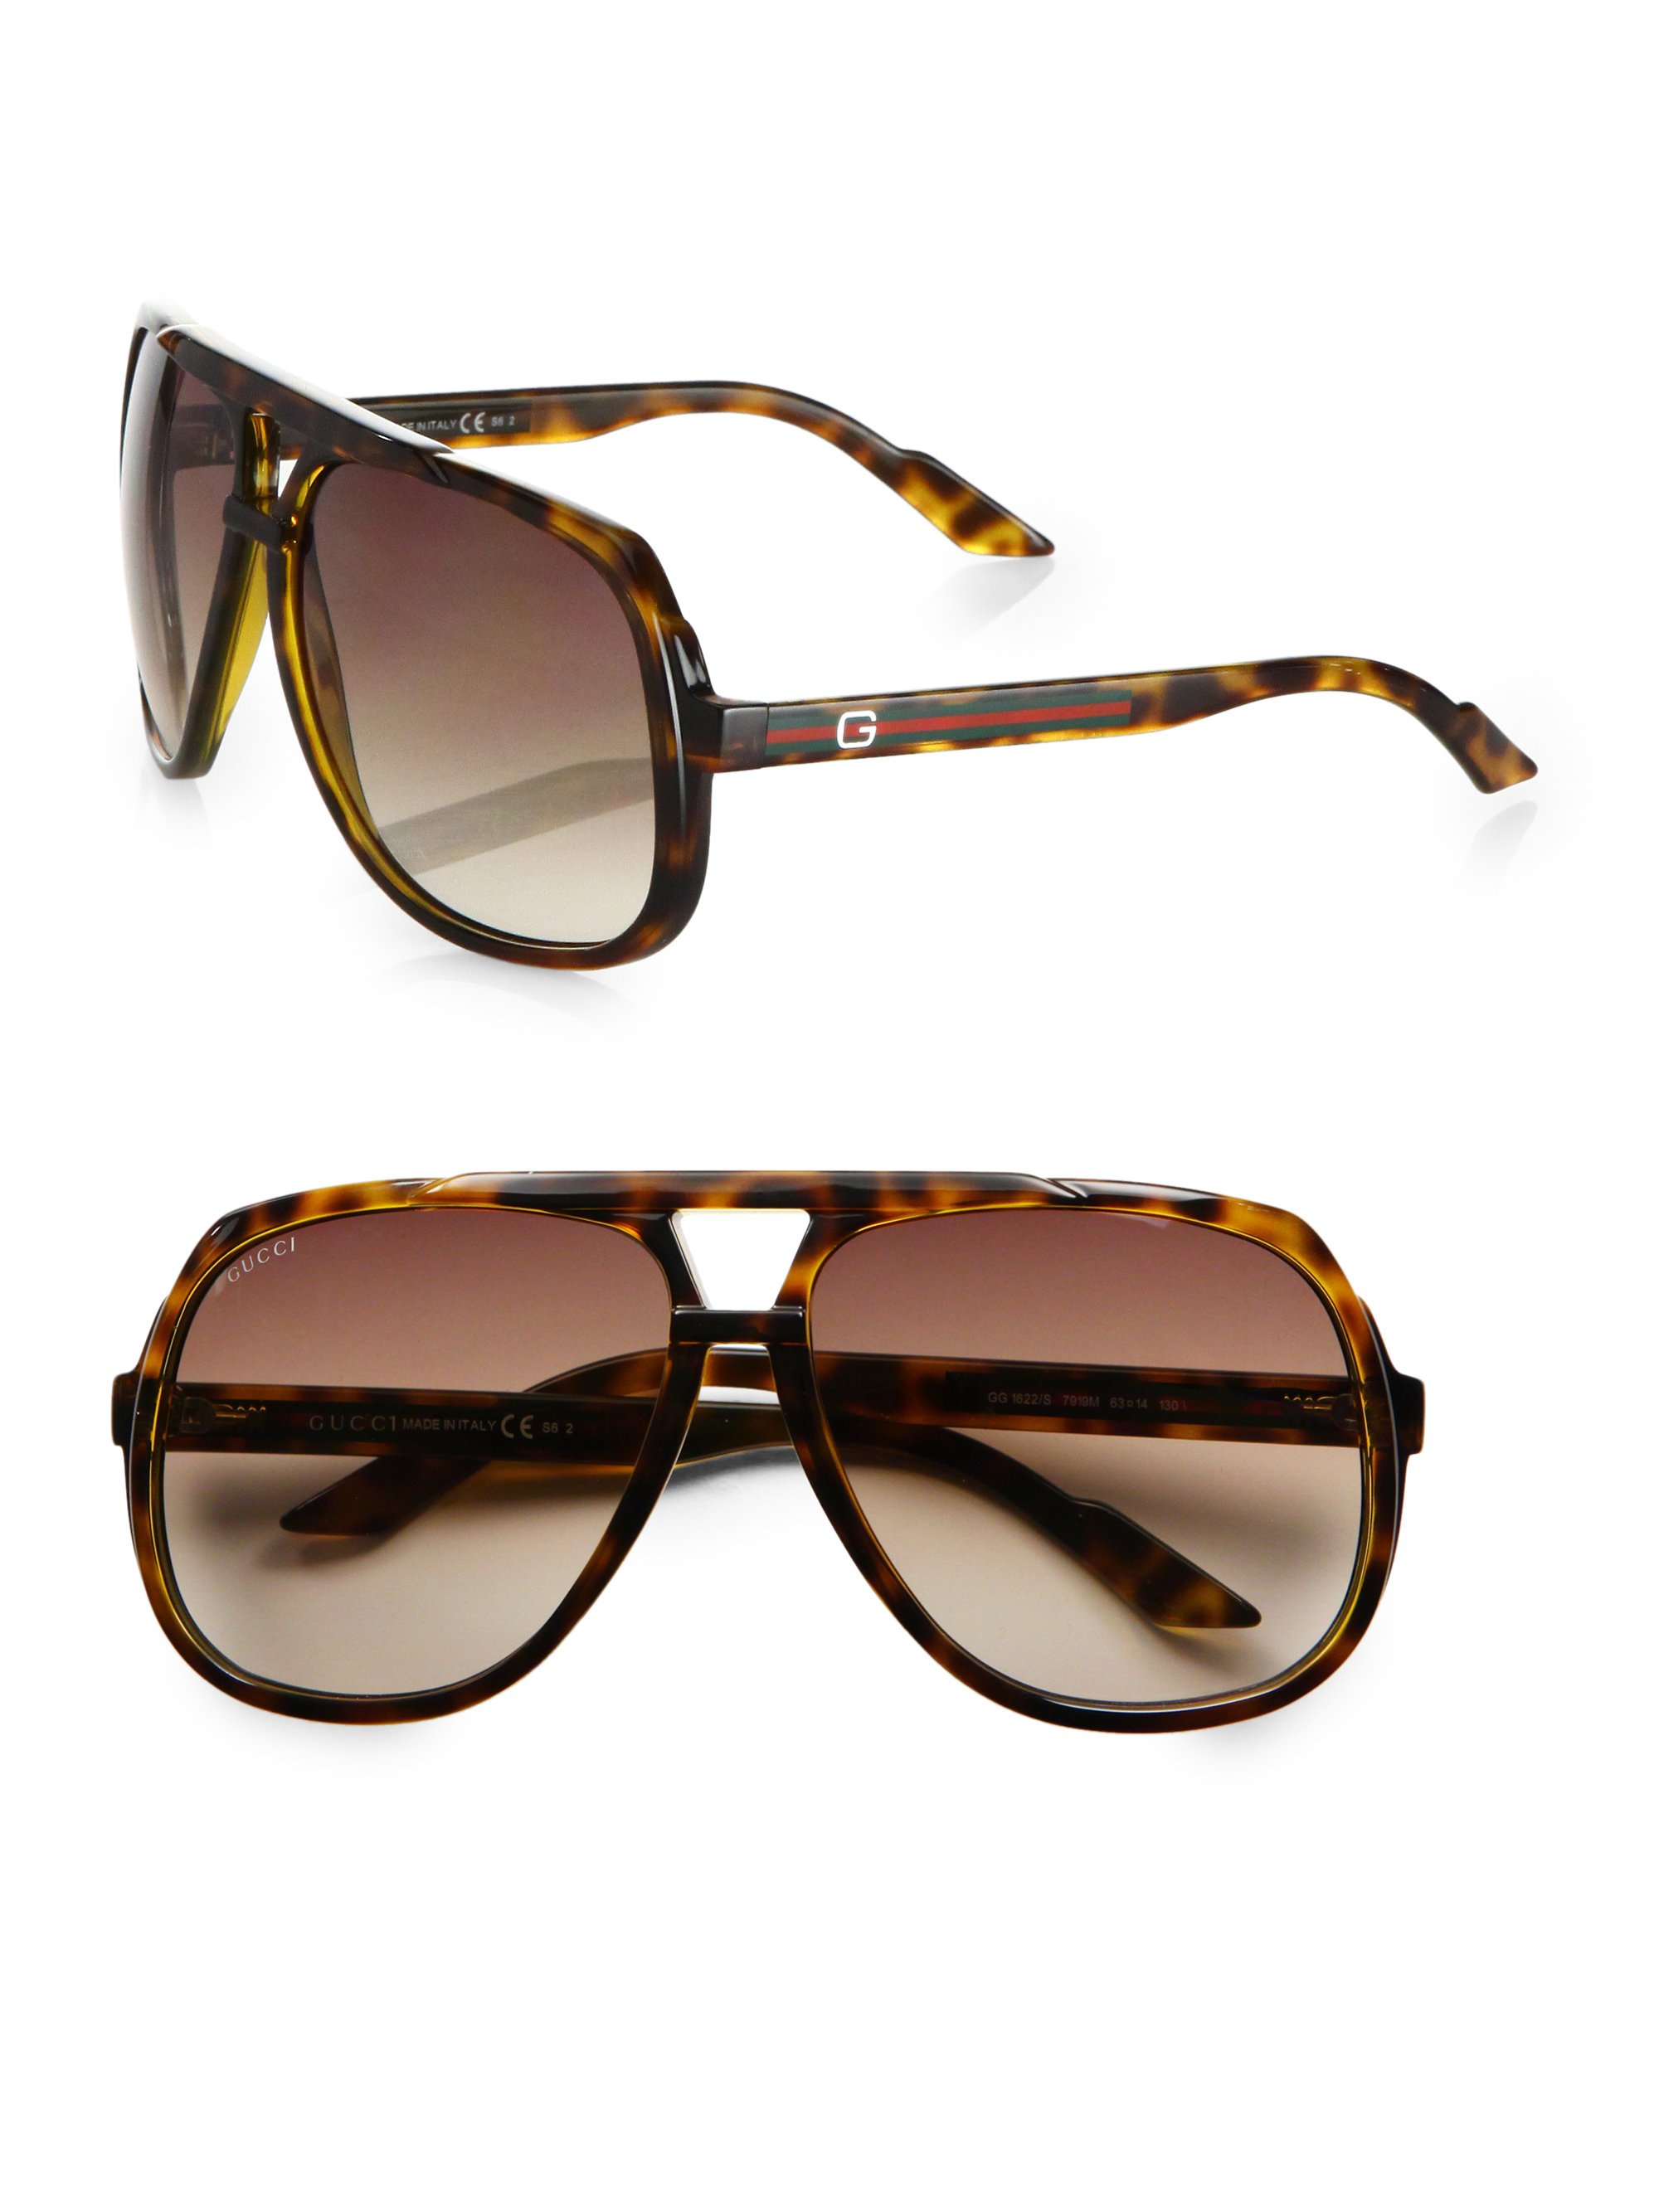 Lyst - Gucci Plastic Aviator Sunglasses in Brown for Men